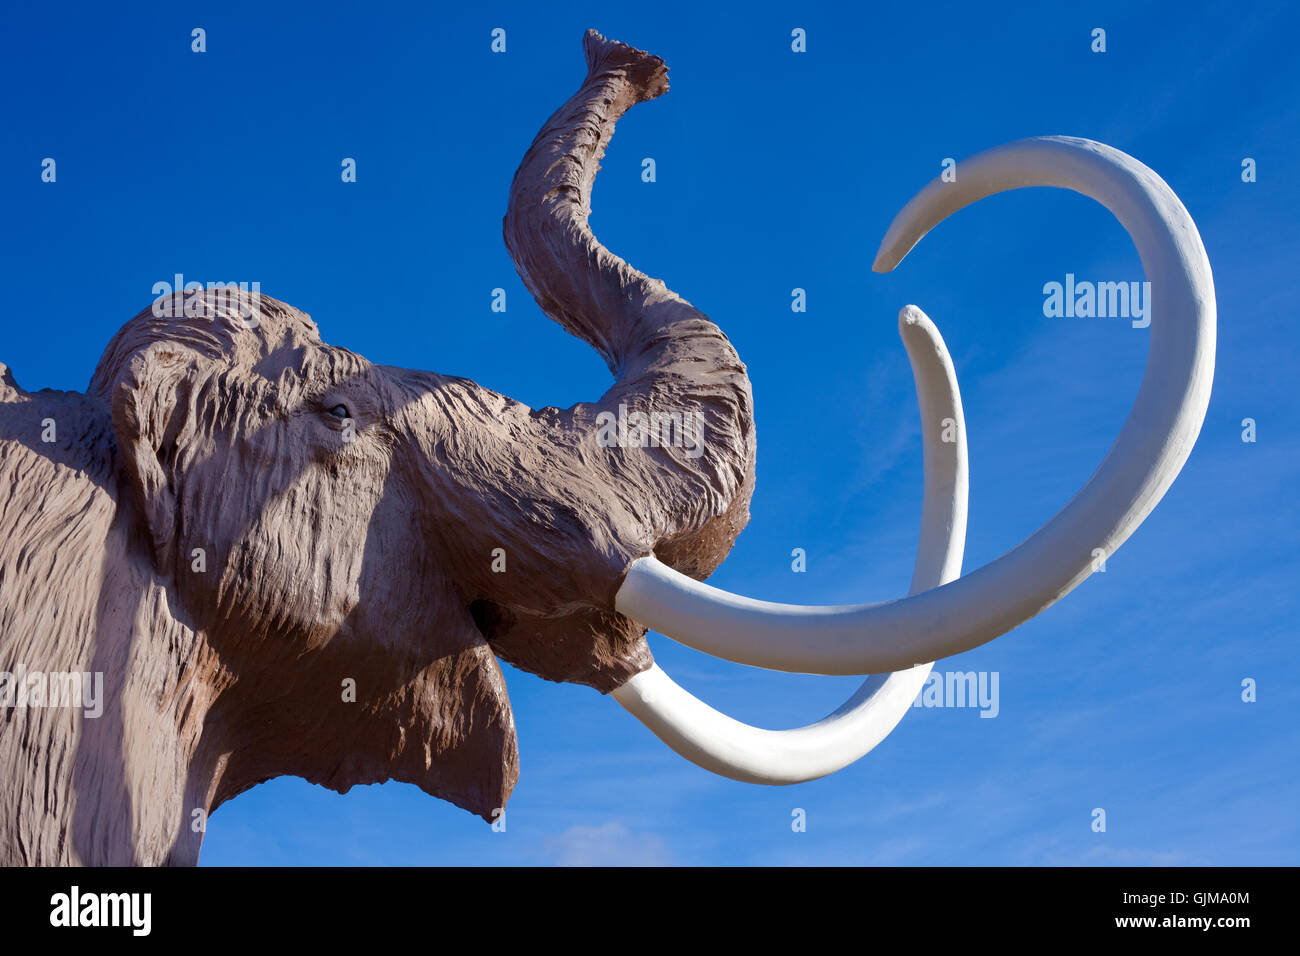 Mammoth walking, mascot style in 2023